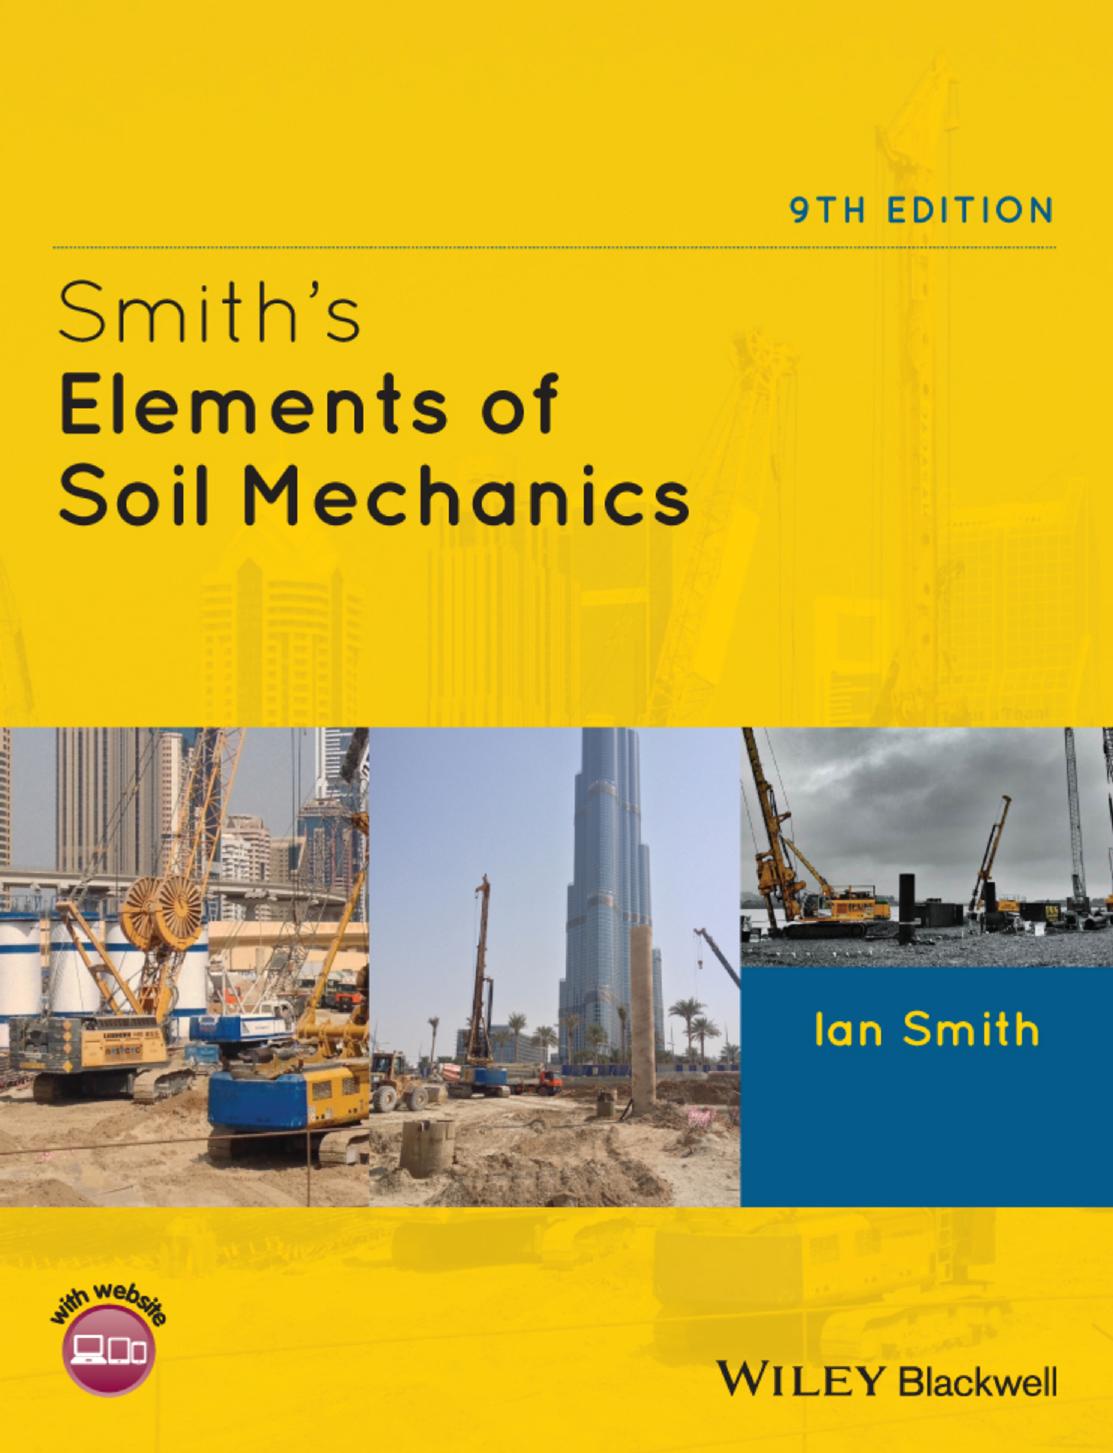 Smith’s Elements of Soil Mechanics